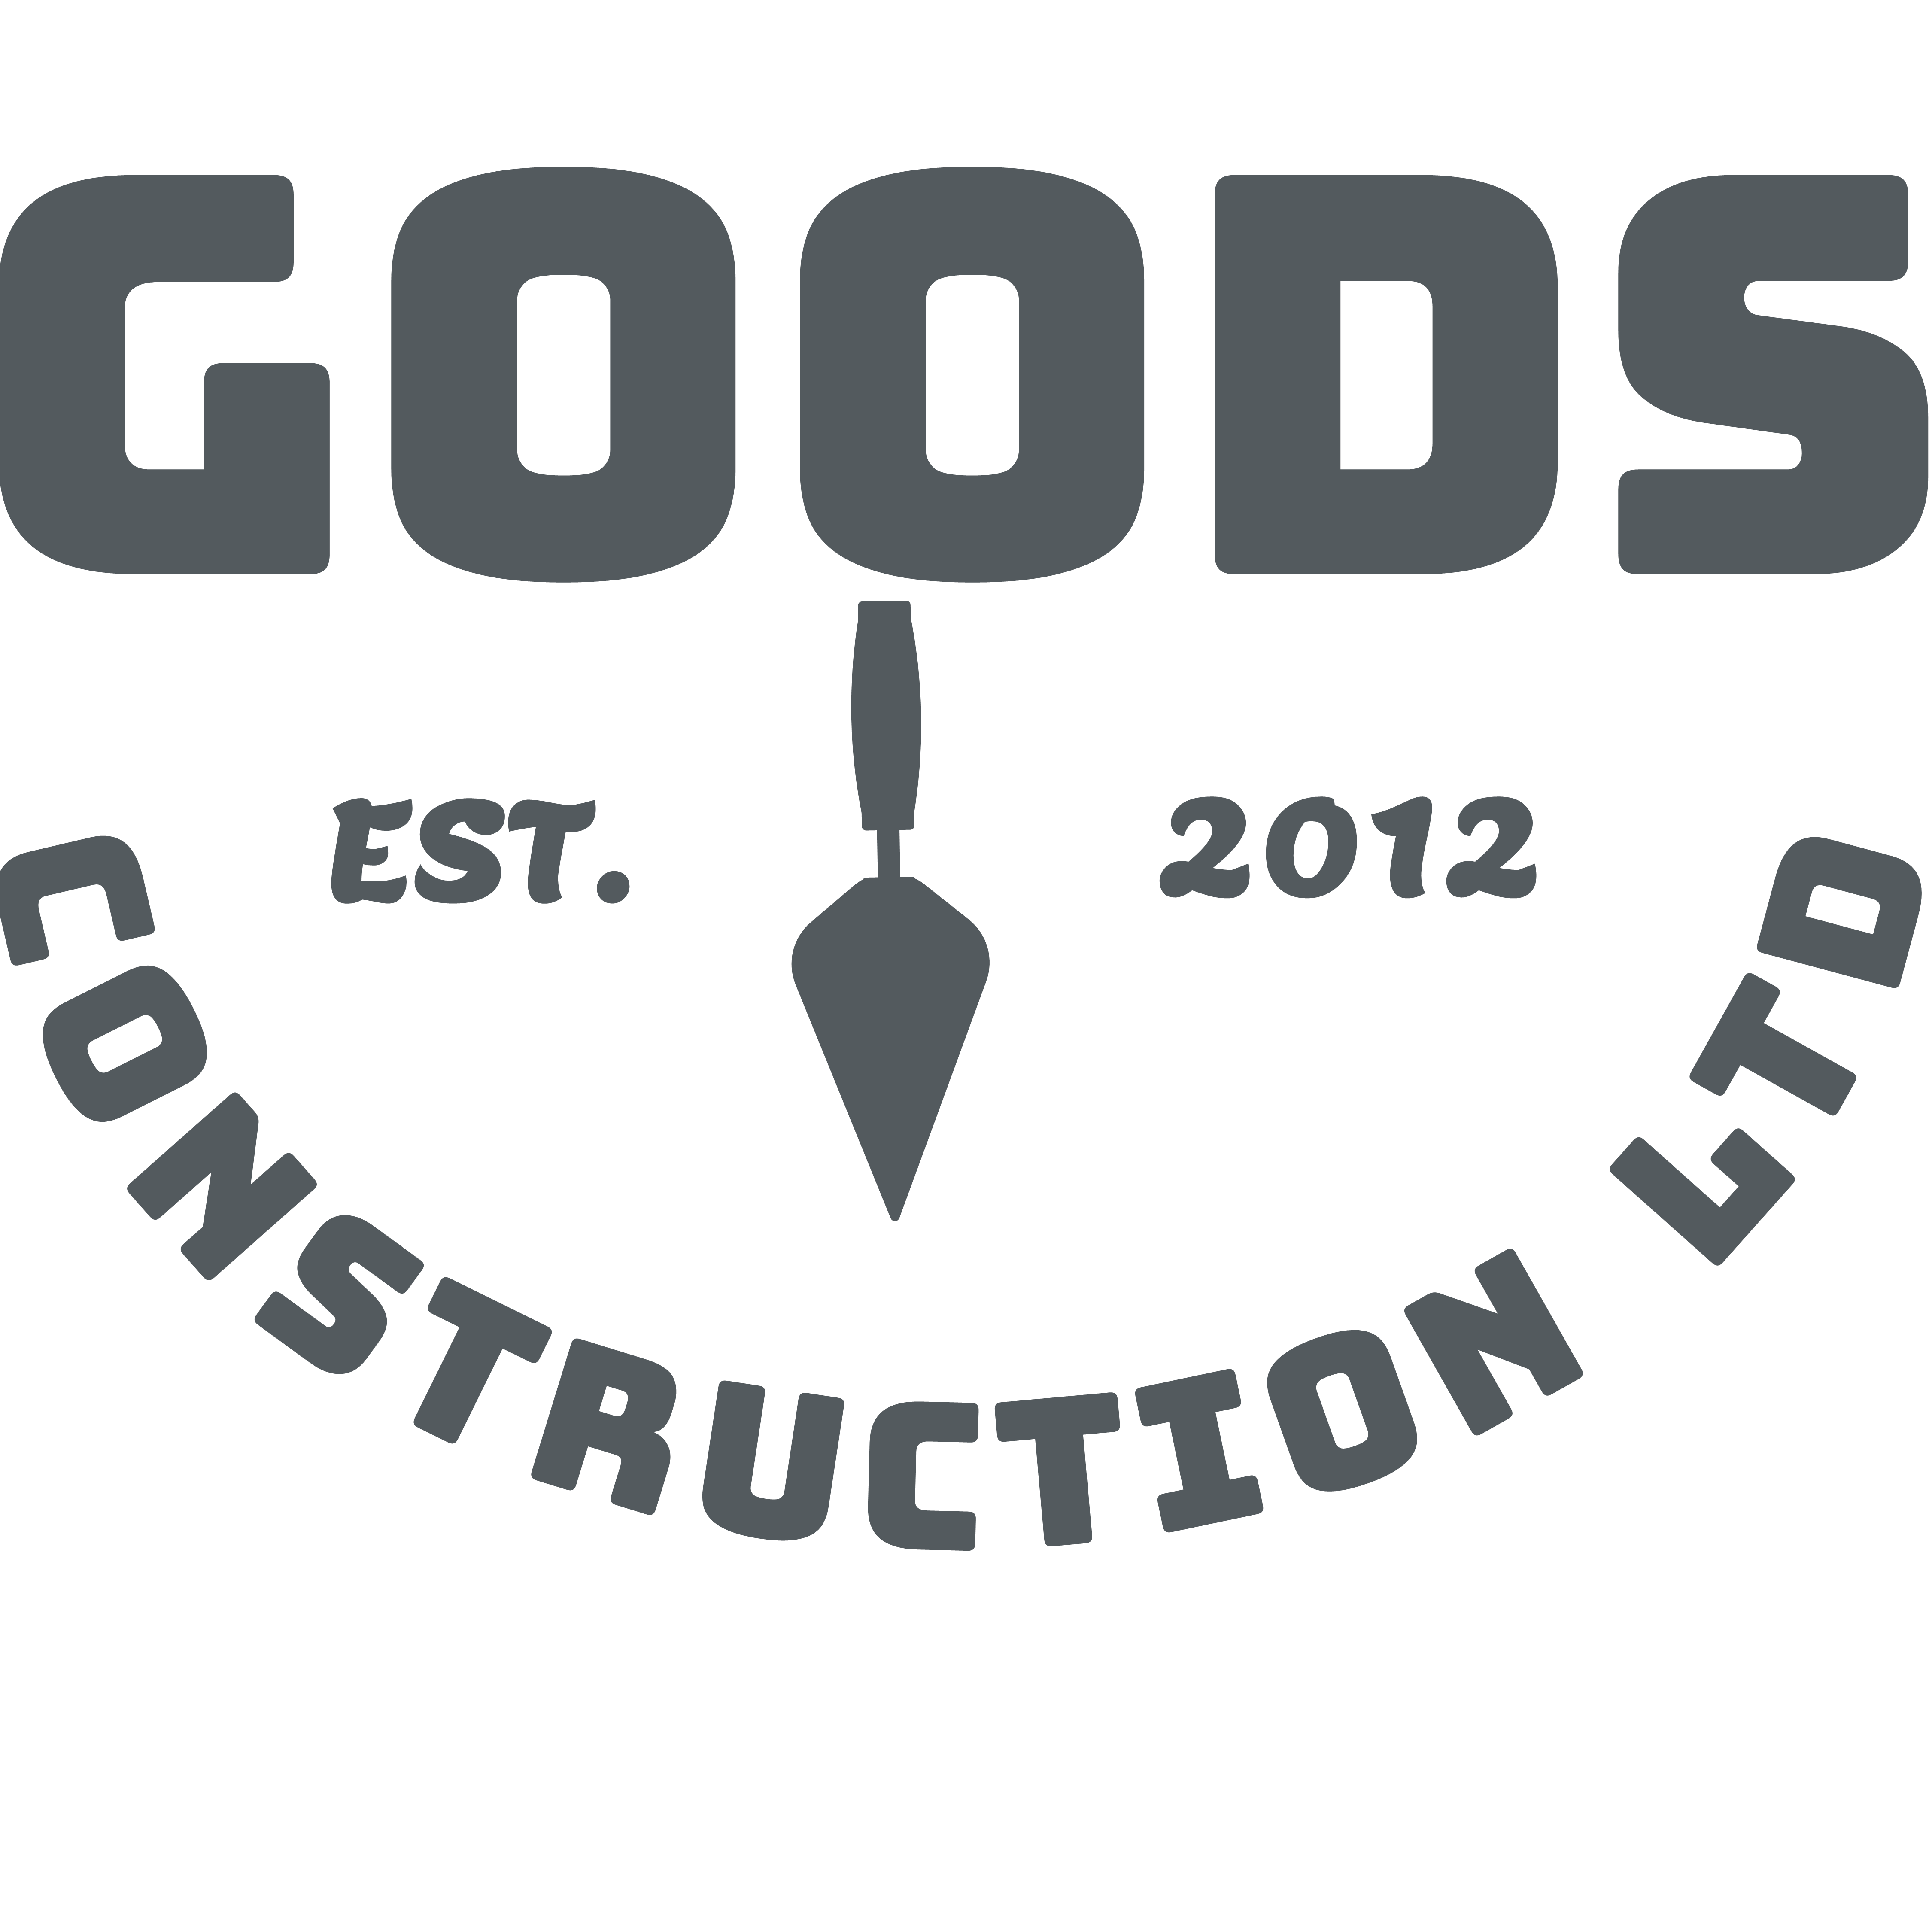 Goods construction